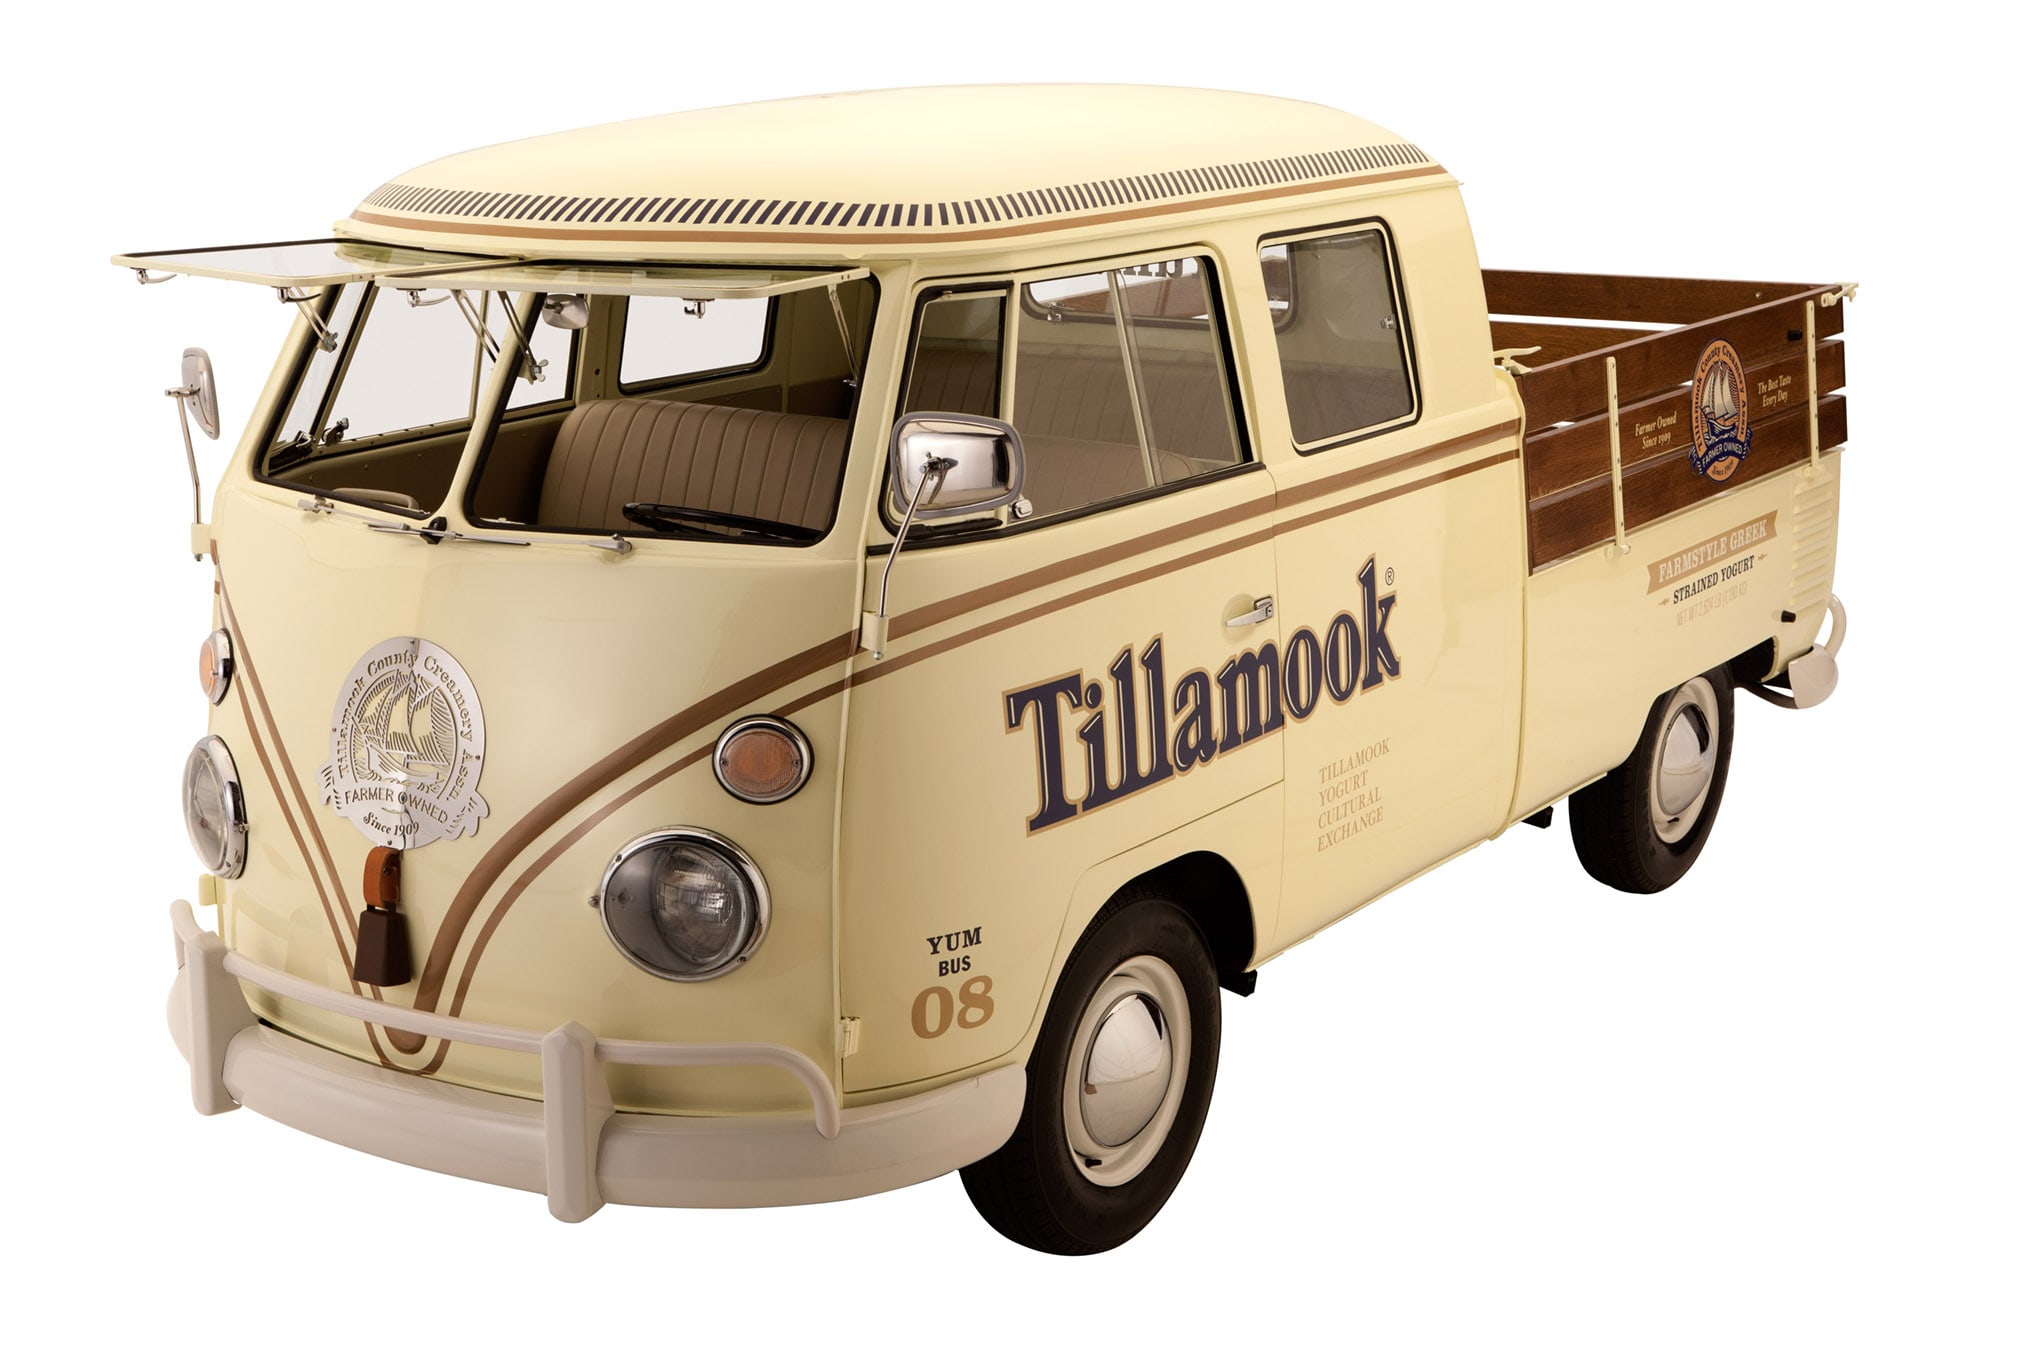 Tillamook dairy promotion design yum bus